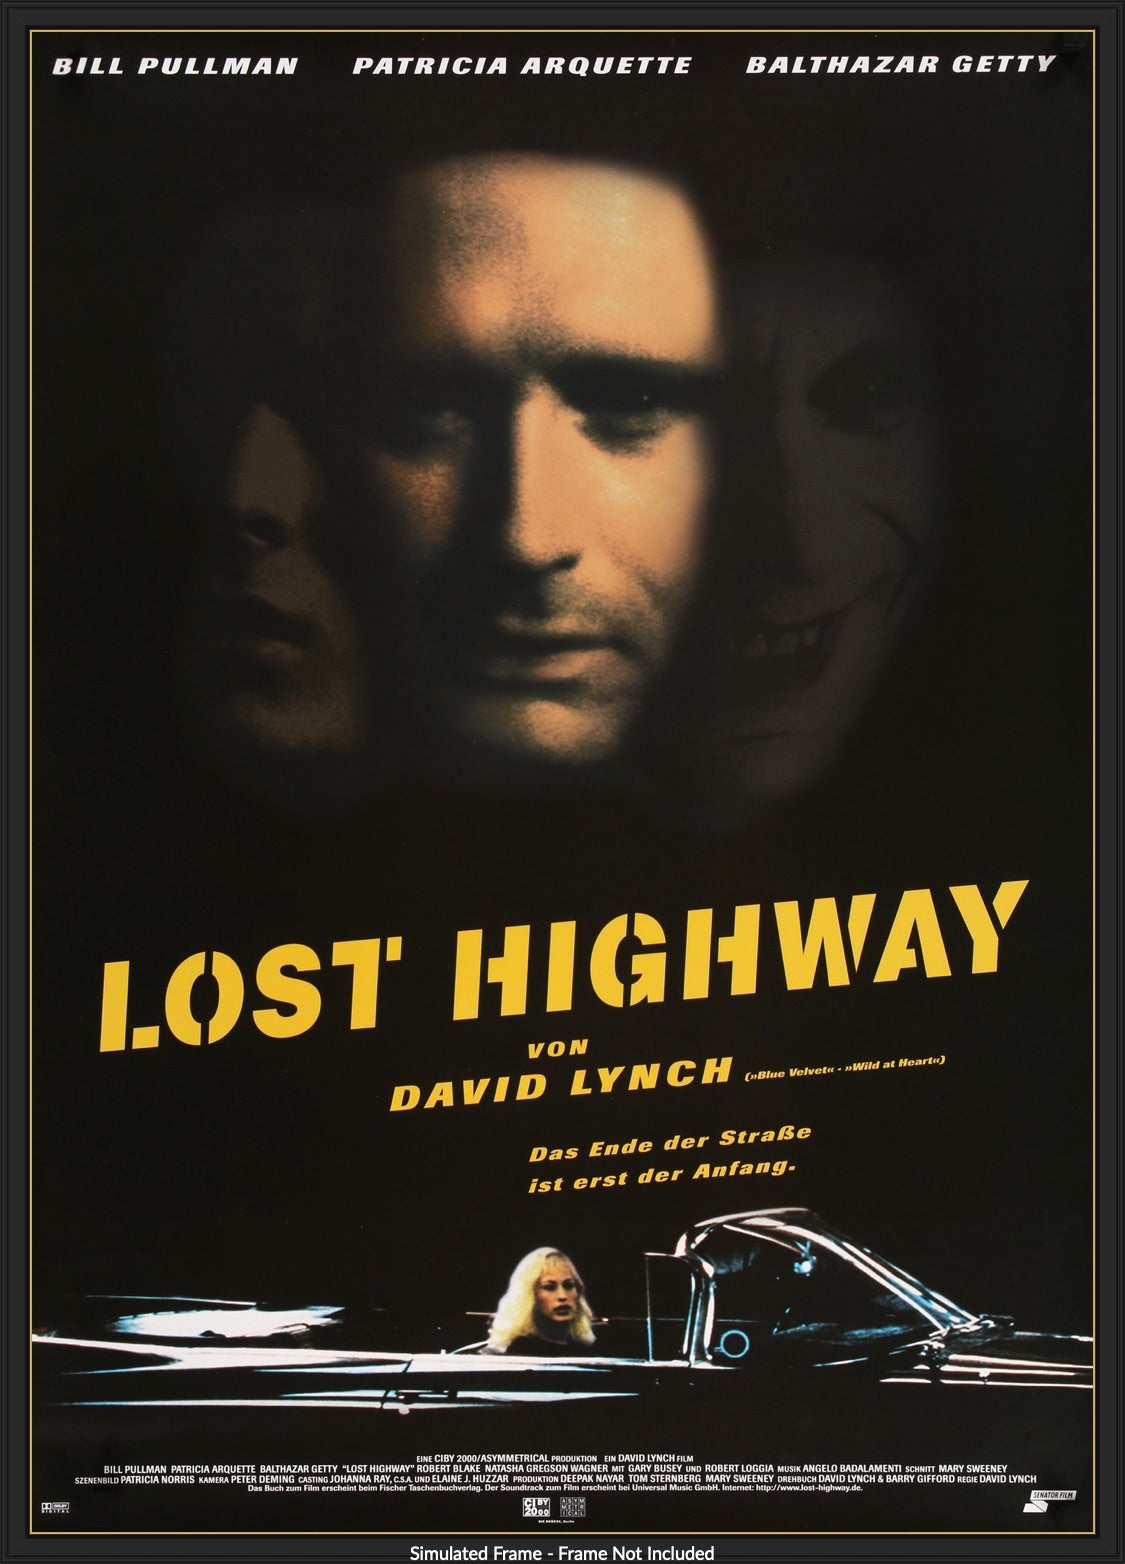 Lost Highway (1997) original movie poster for sale at Original Film Art